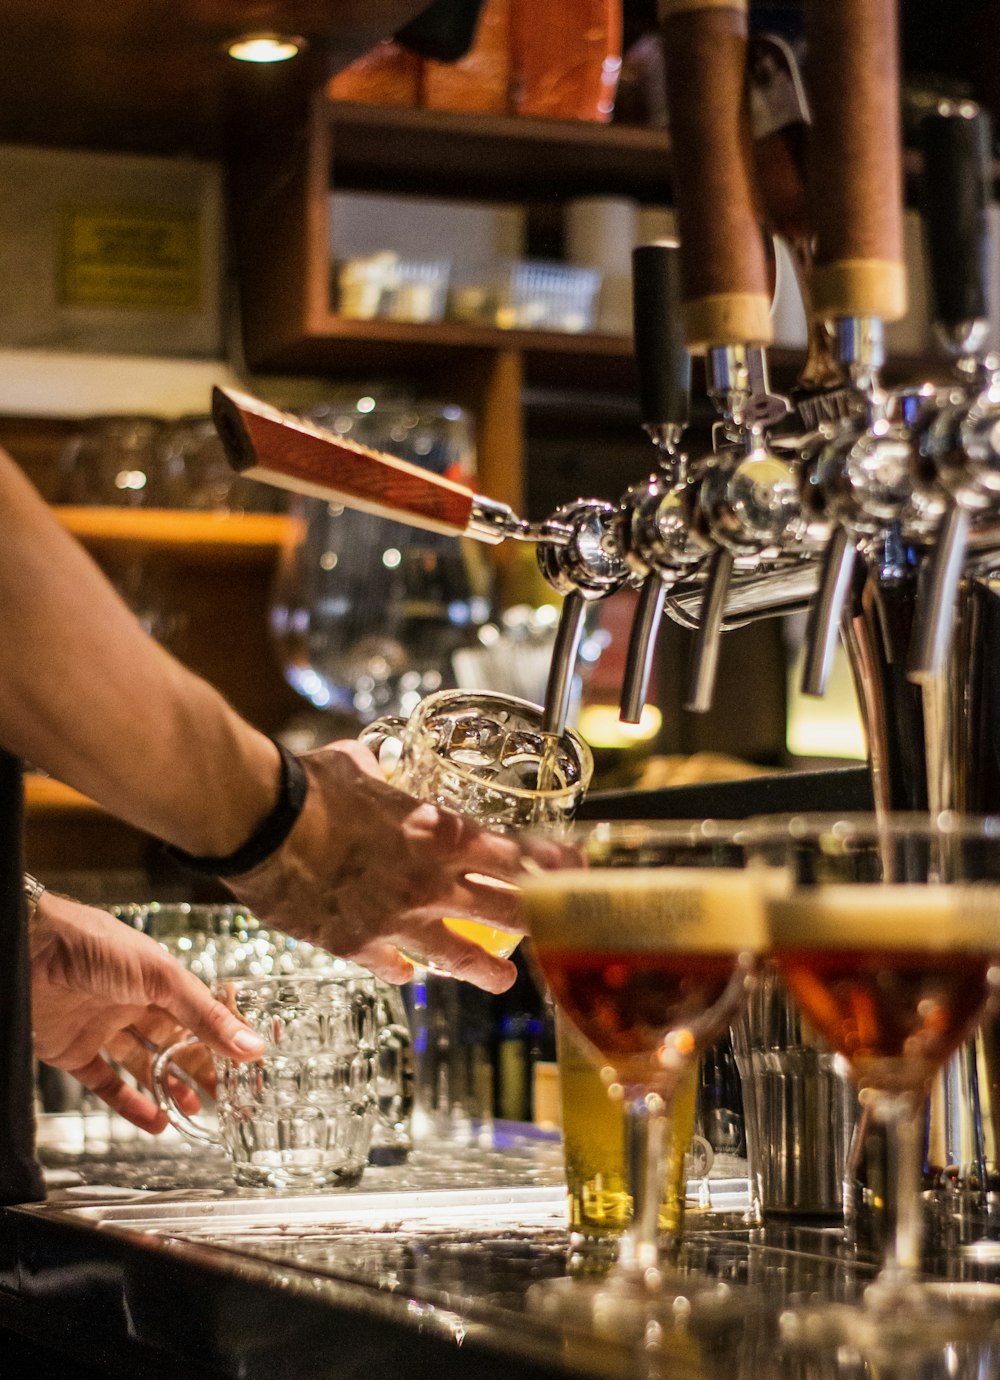 Un barman sert un verre de bière dans un bar